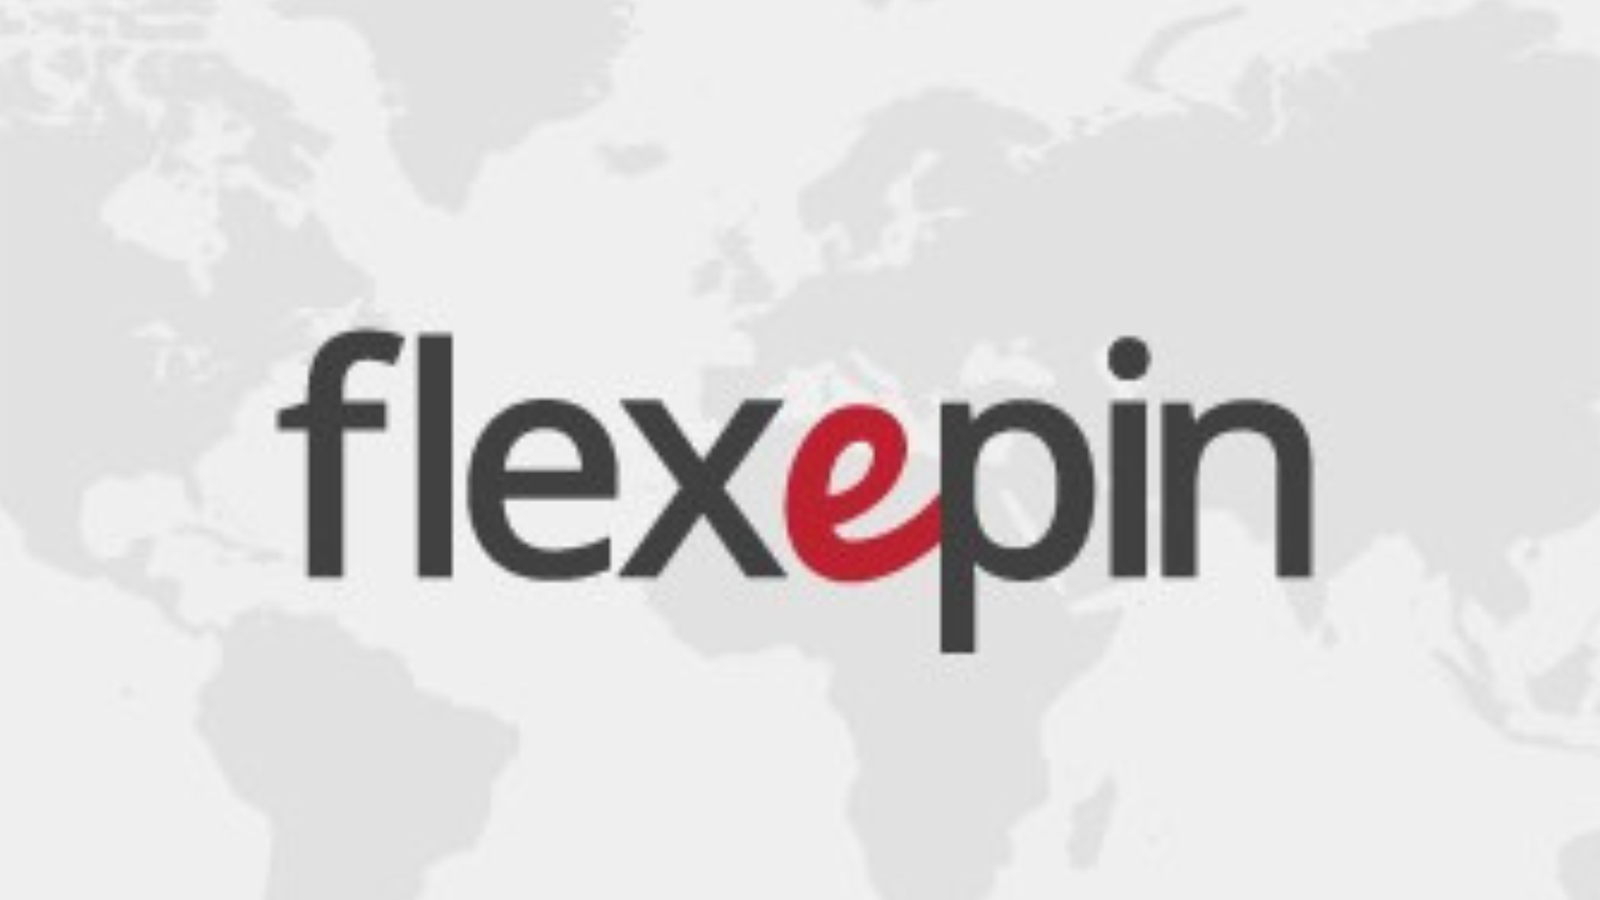 Online Casinos with Flexepin